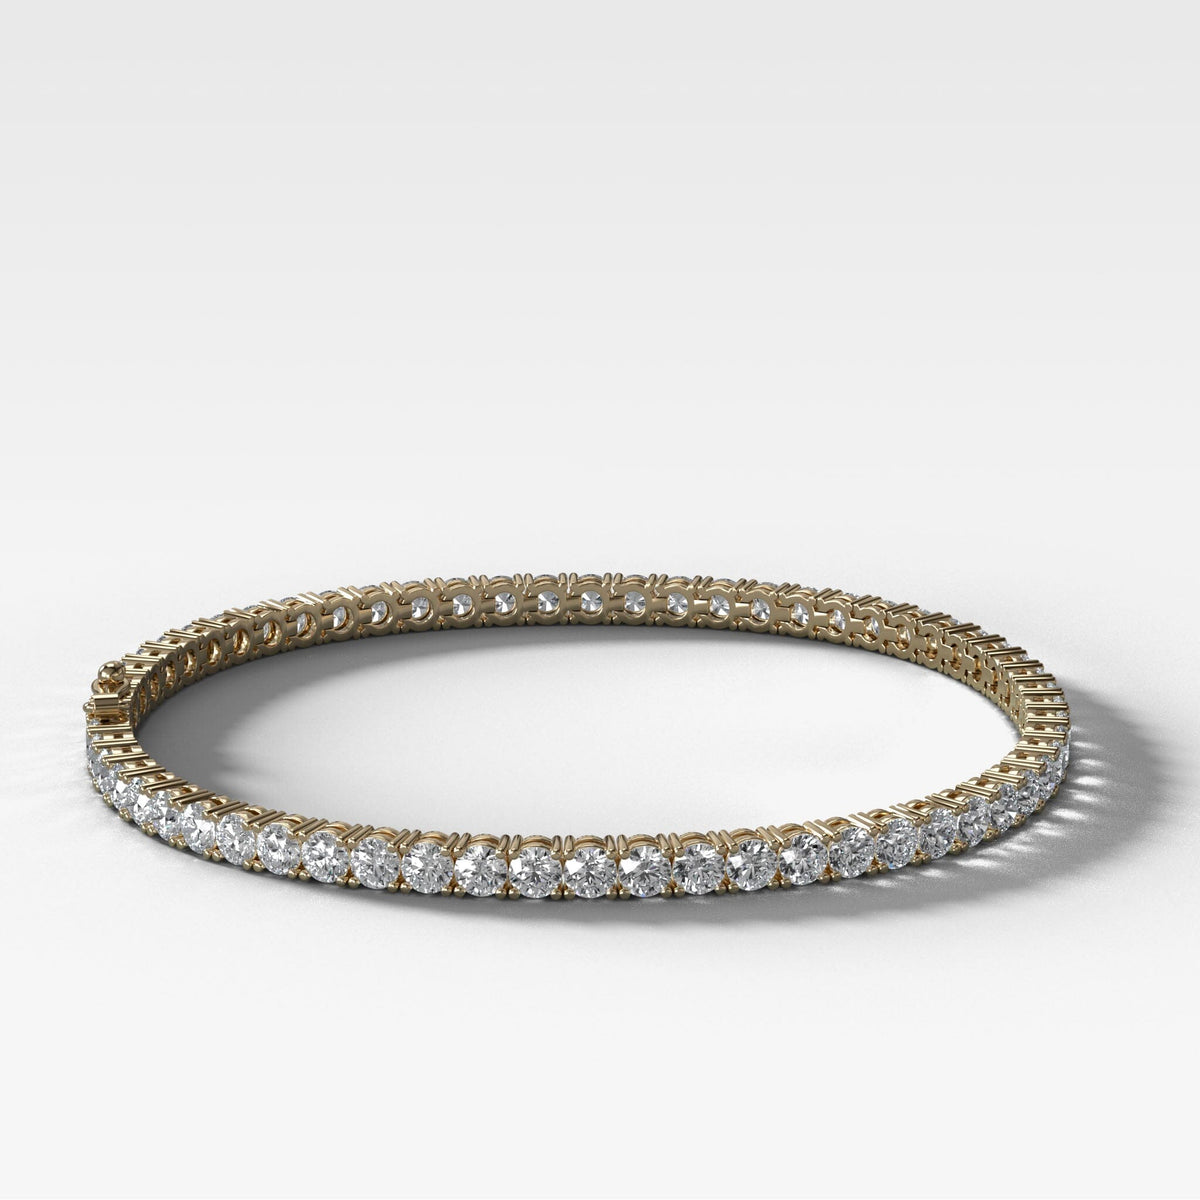 YELLOW GOLD TENNIS BRACELET 001-170-01241 14KY | Van Scoy Jewelers |  Wyomissing, PA